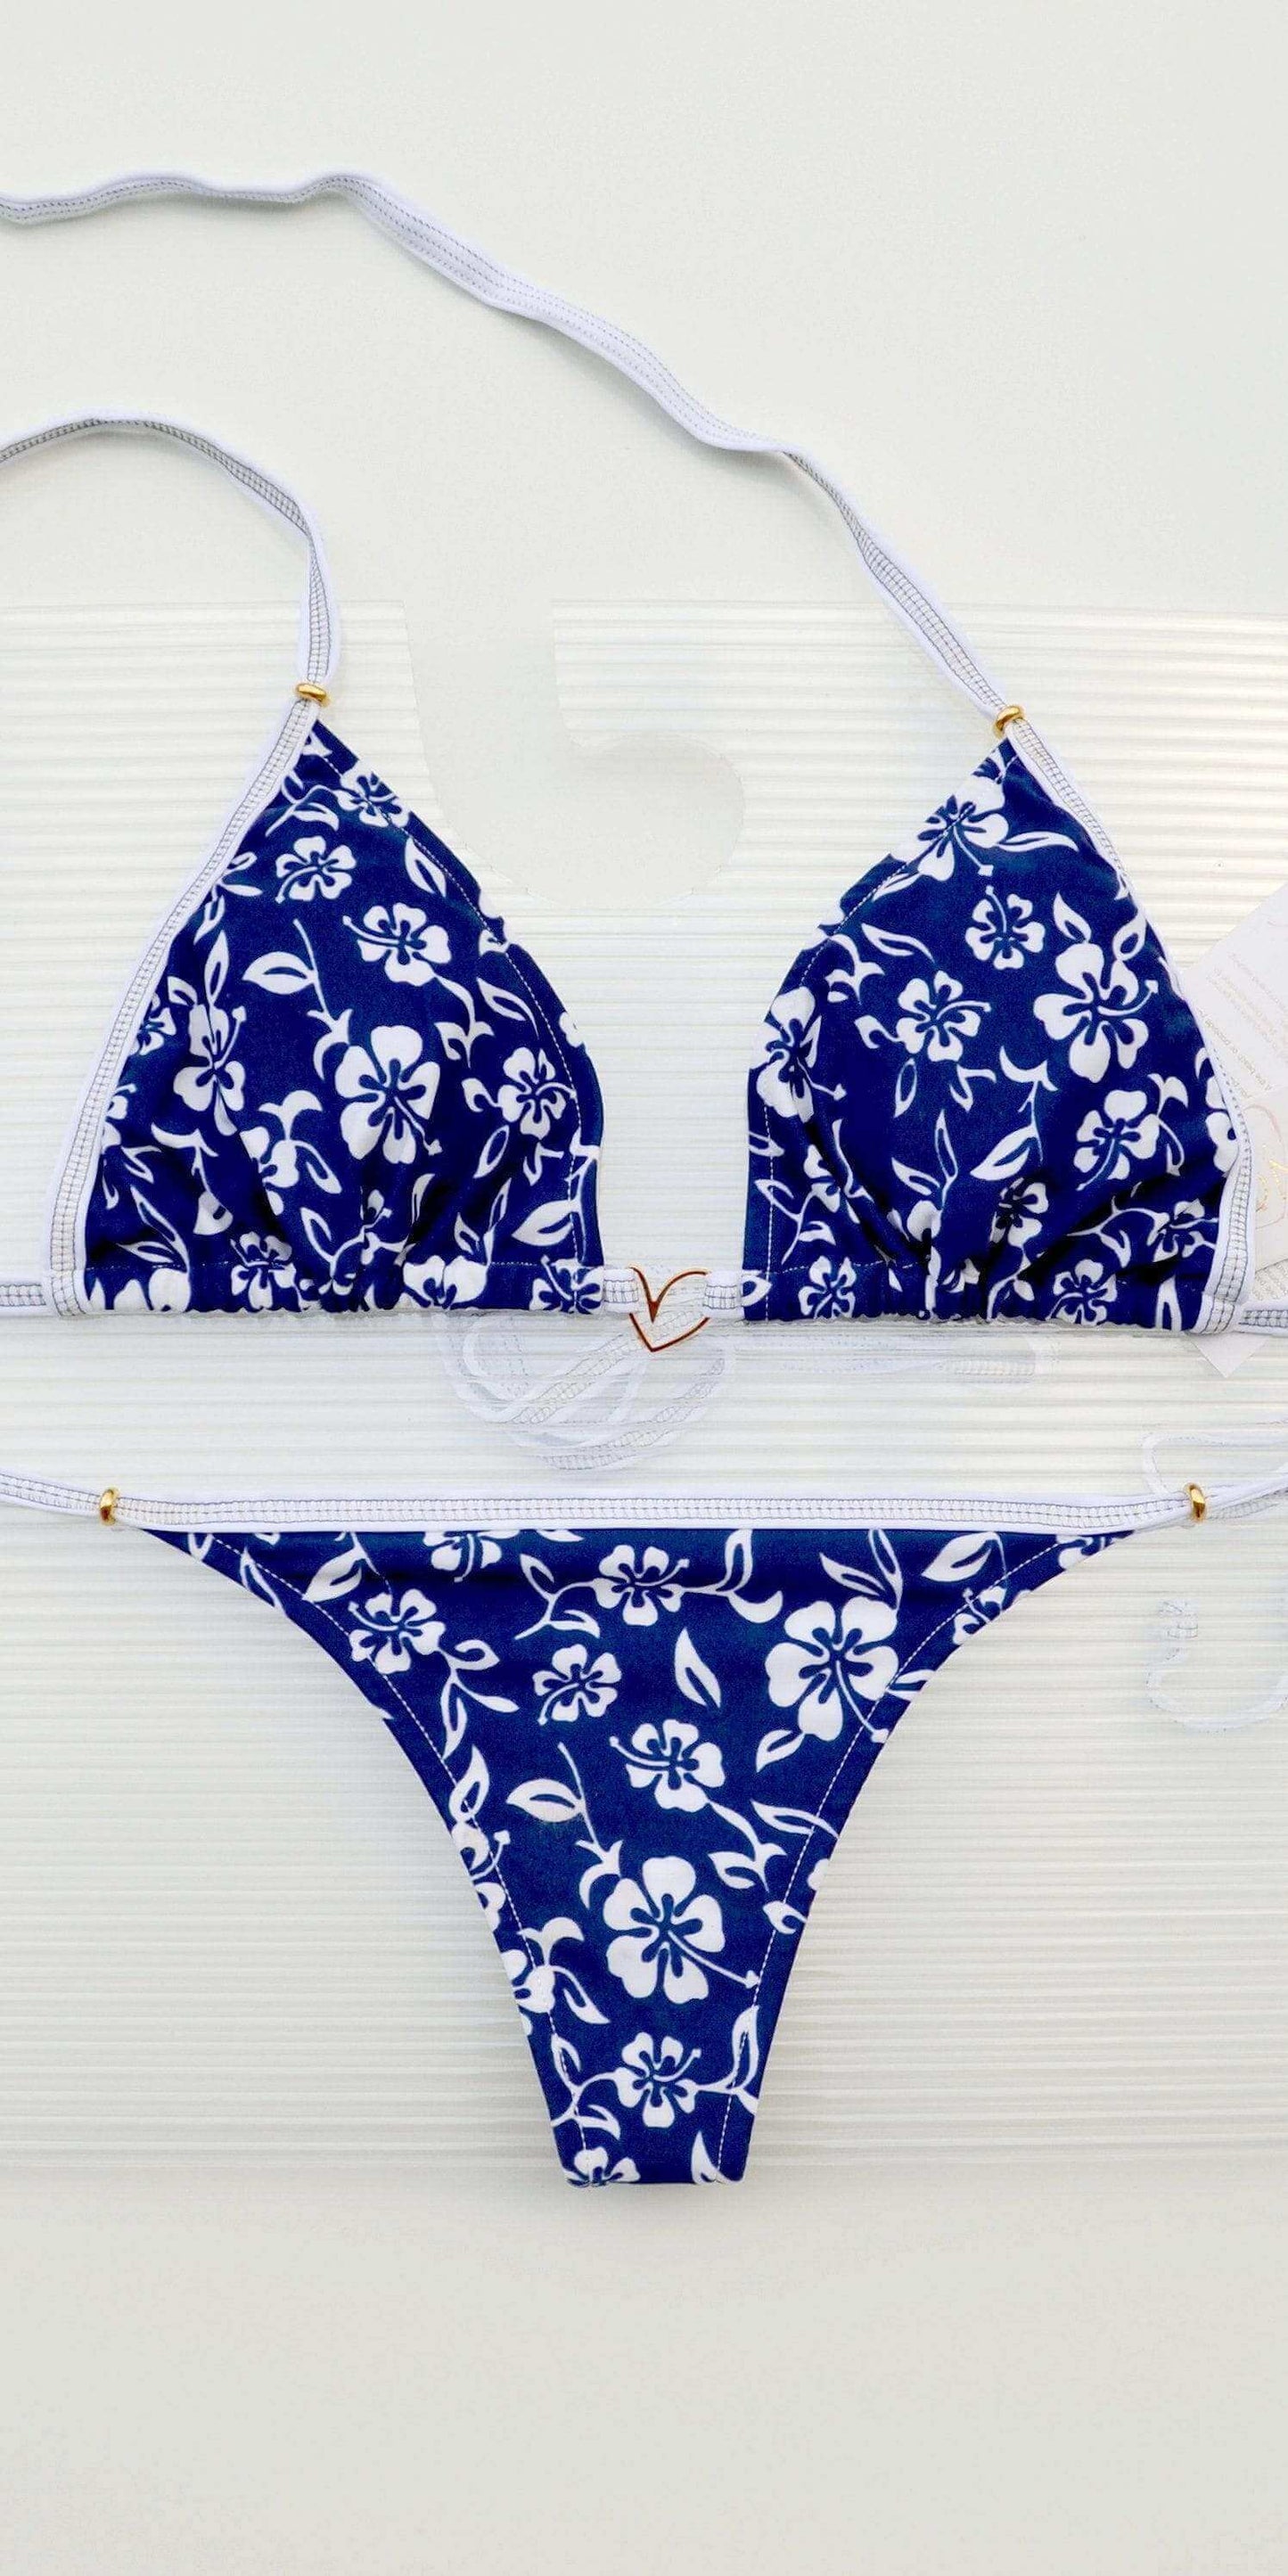 Montoya Apparel & Accessories > Clothing > Swimwear One Size / Print Liliana Montoya Swim Bikini Brasilerita Blue w/ White Flower Print Triangle Top & Micro Thong Bottom